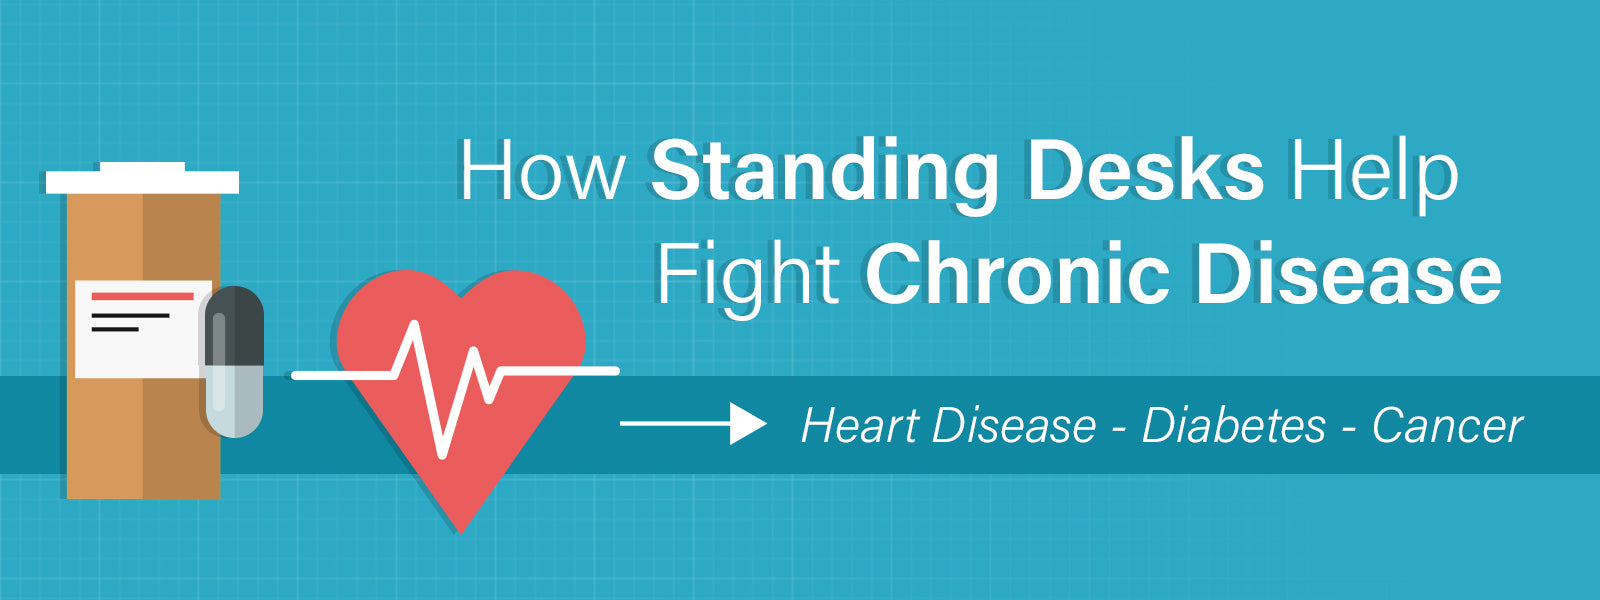 Standing Desks and Chronic Disease